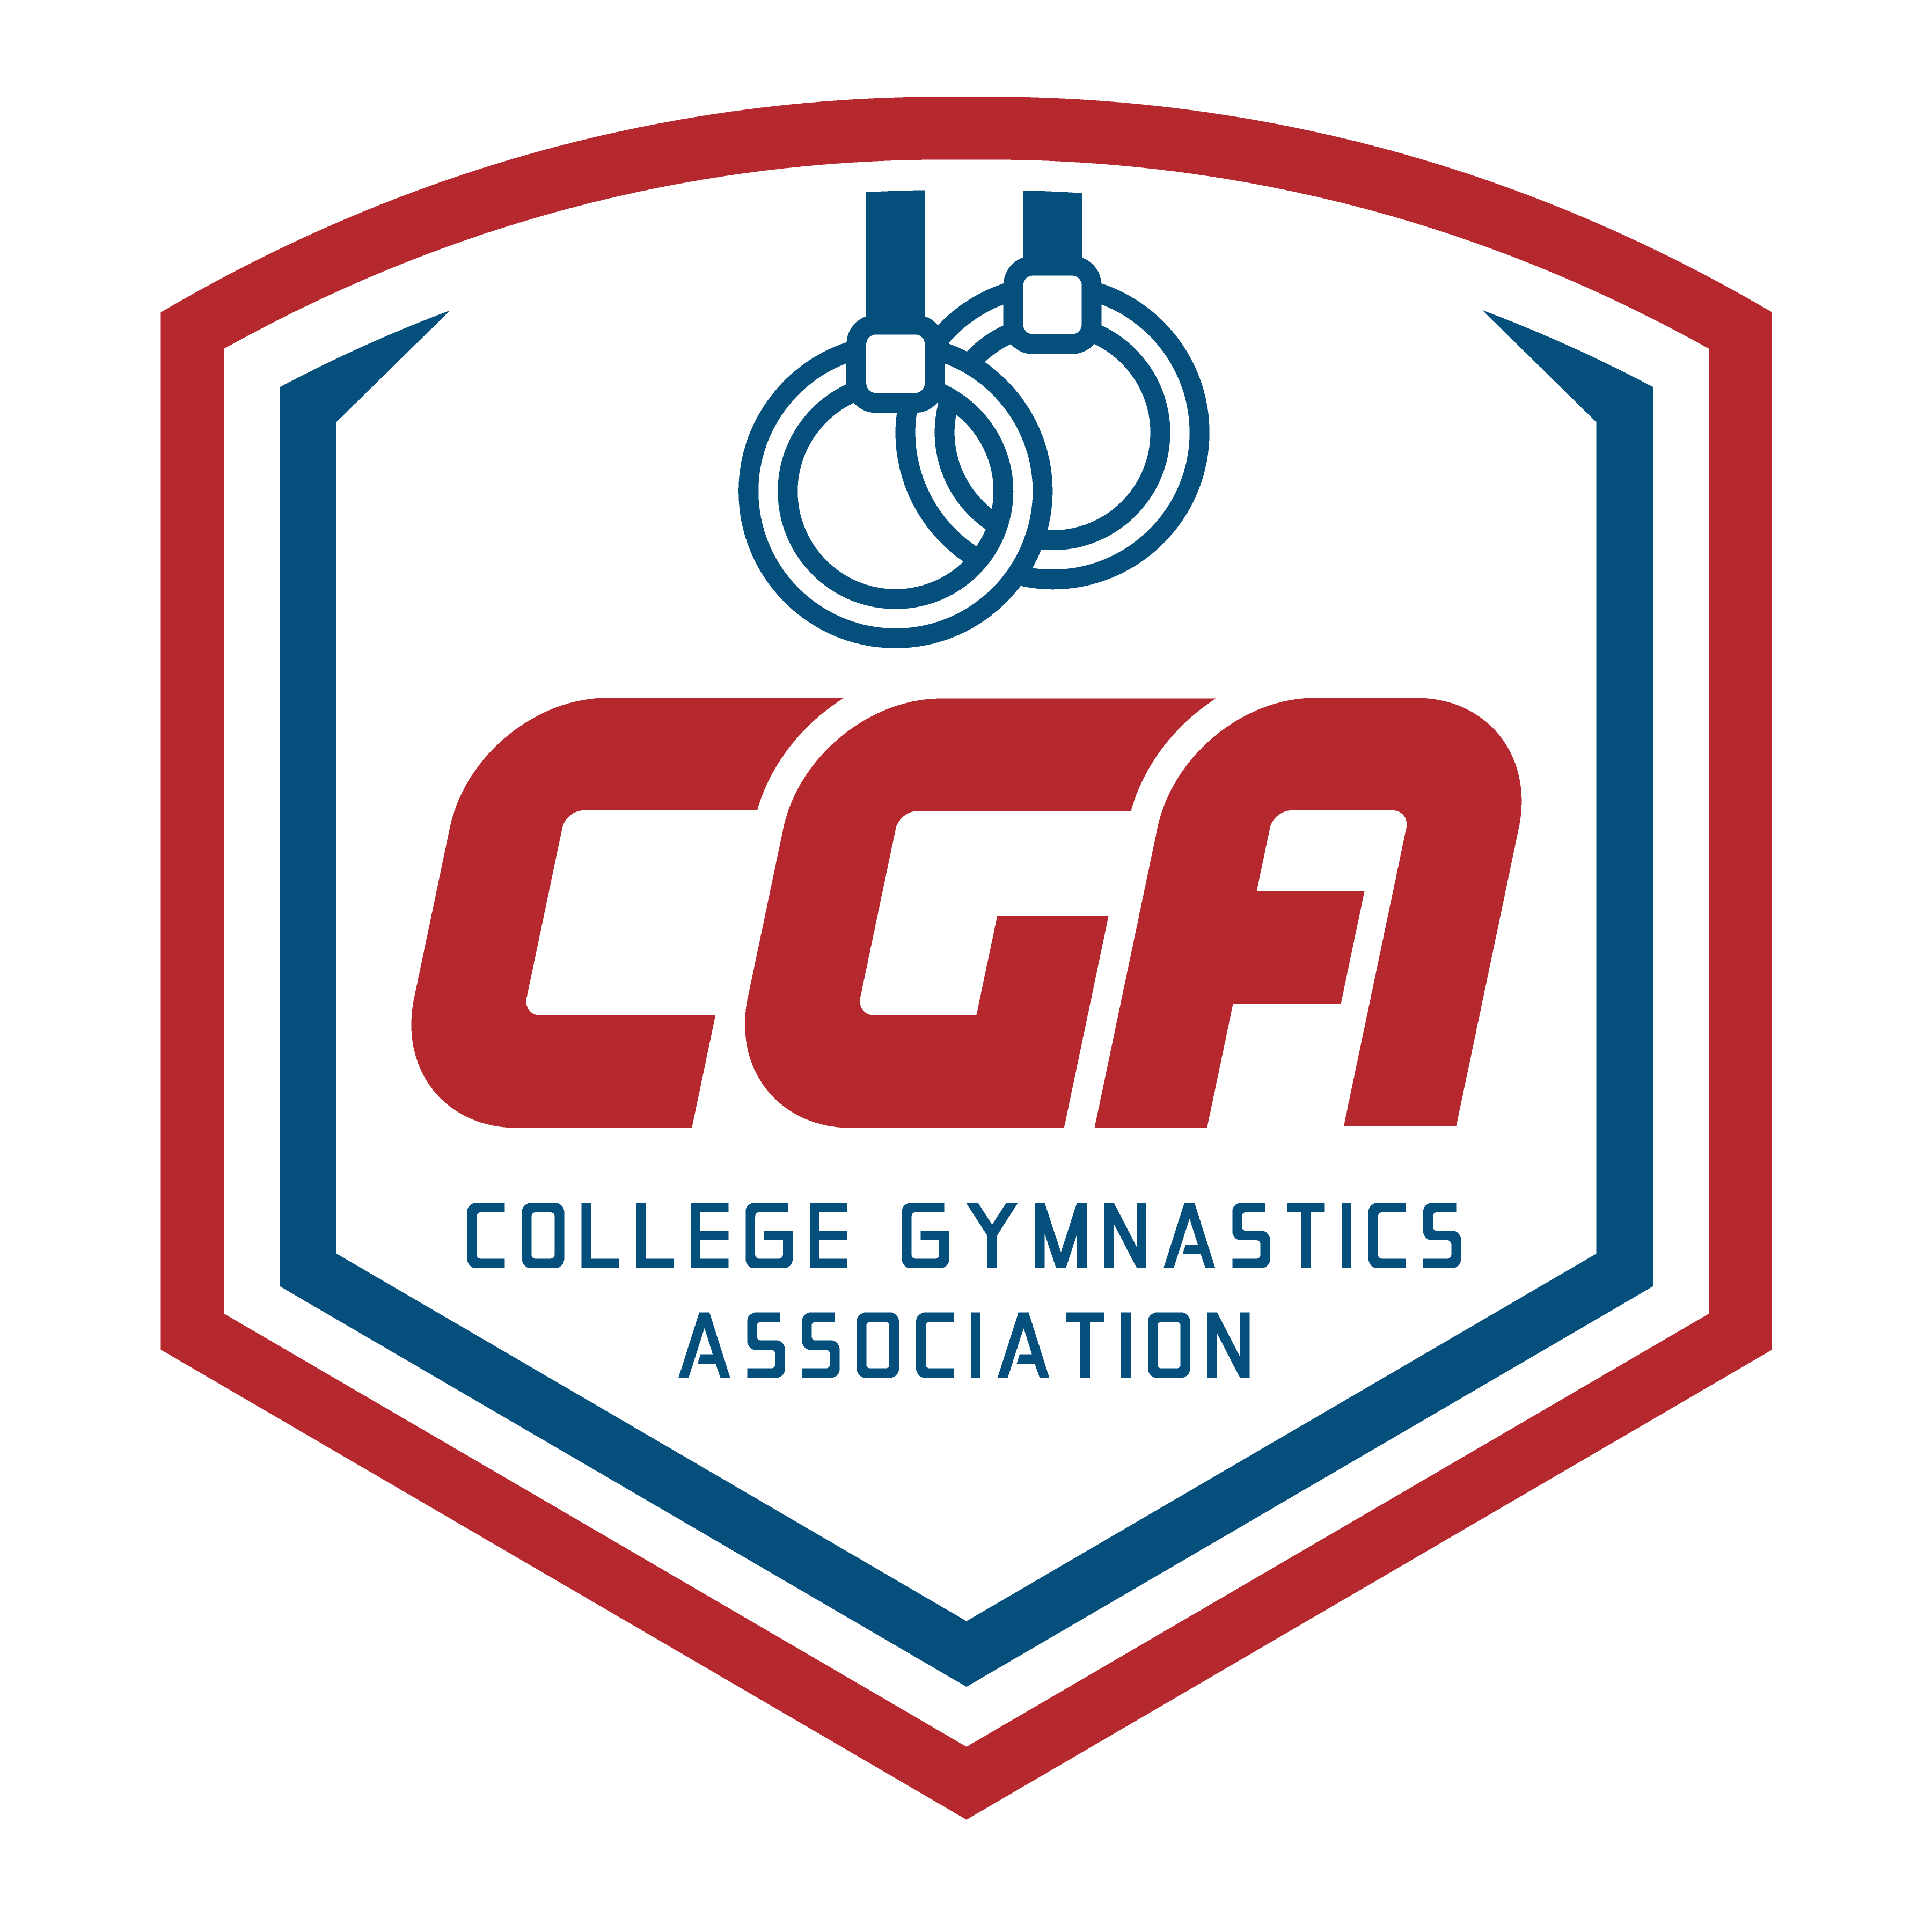 College Gymnastics Association logo